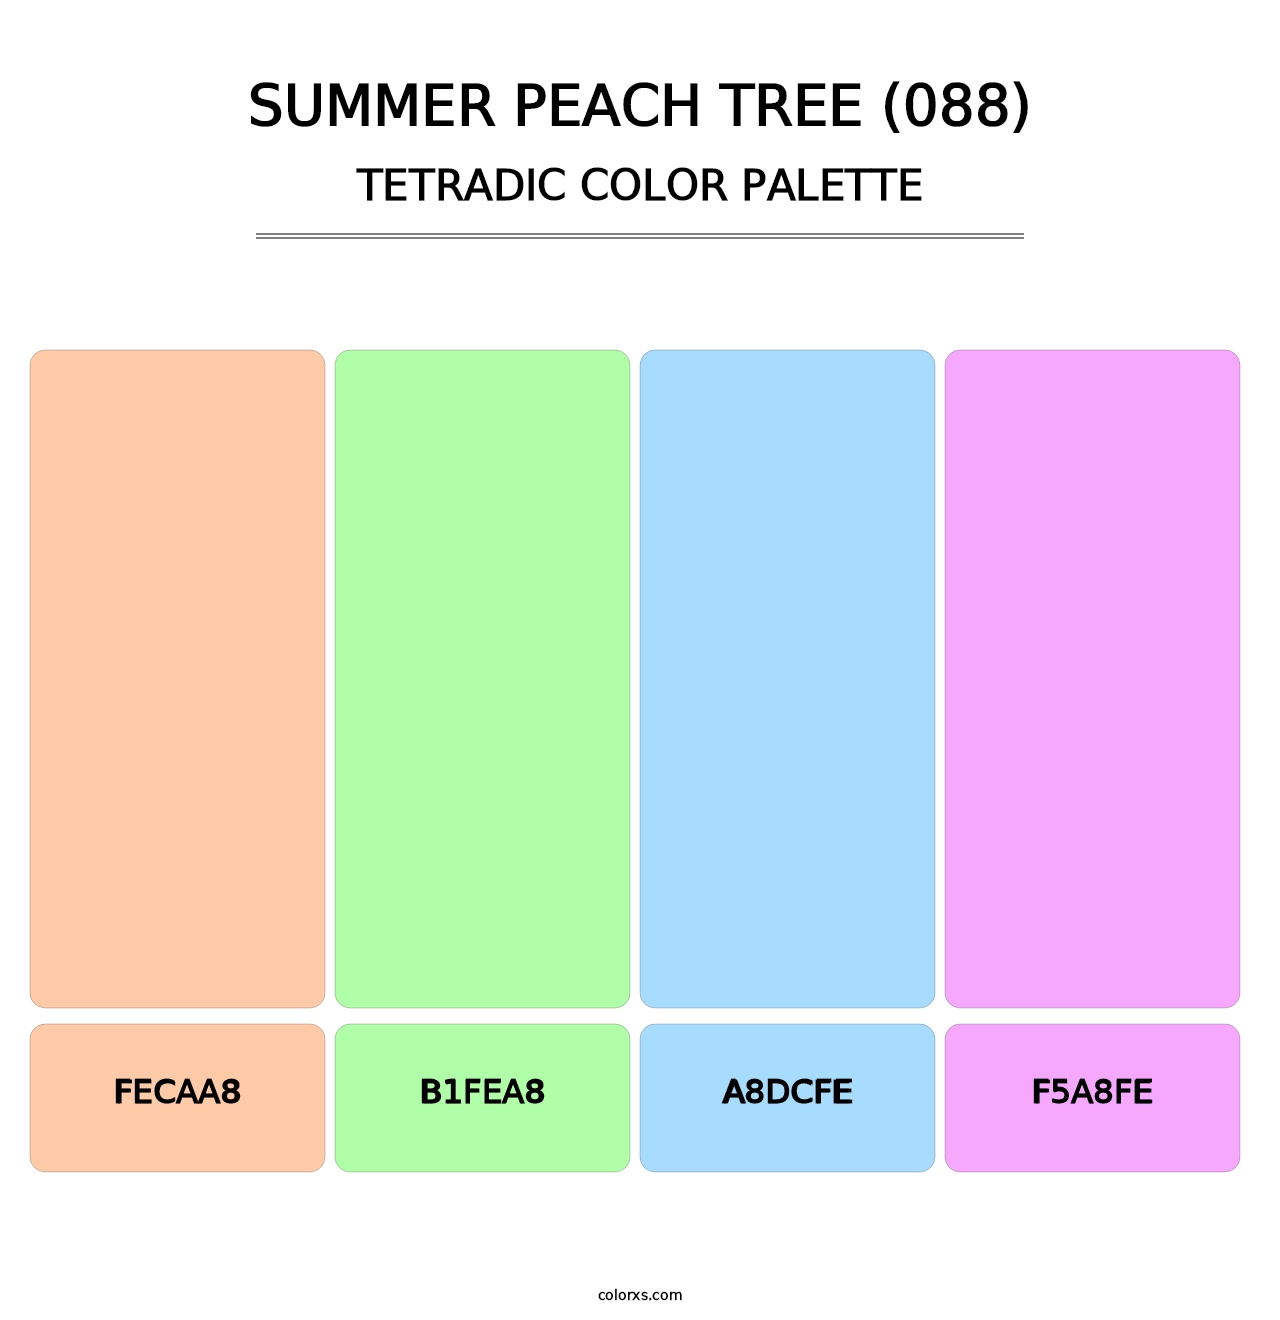 Summer Peach Tree (088) - Tetradic Color Palette